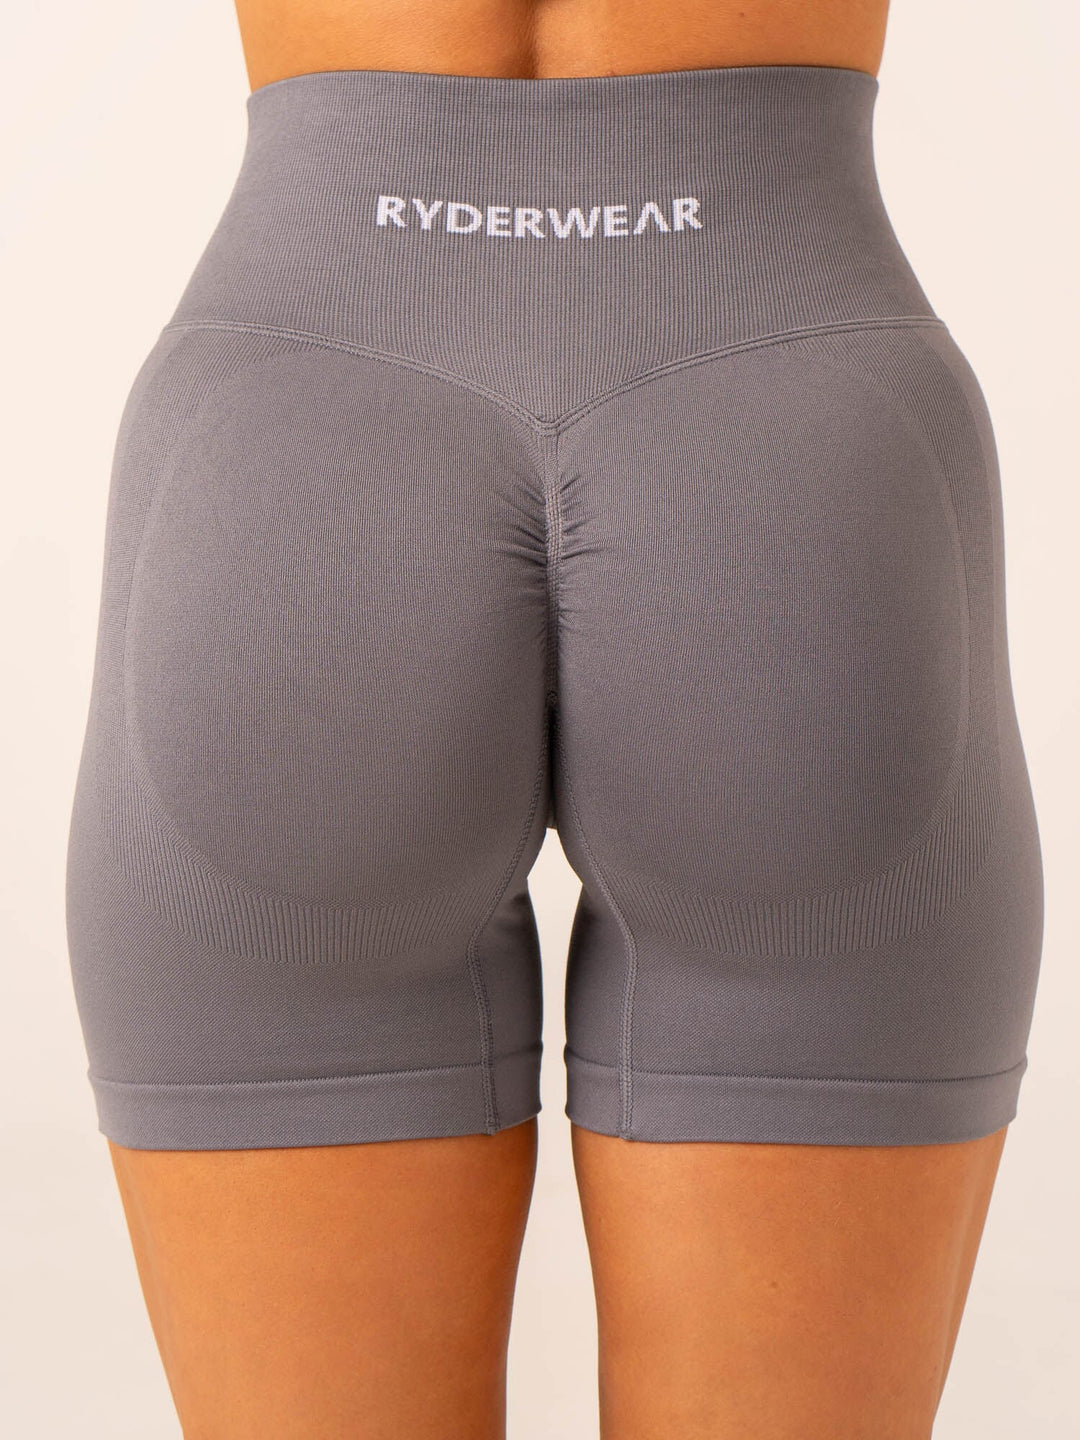 Lift BBL Scrunch Seamless Shorts - Charcoal Clothing Ryderwear 